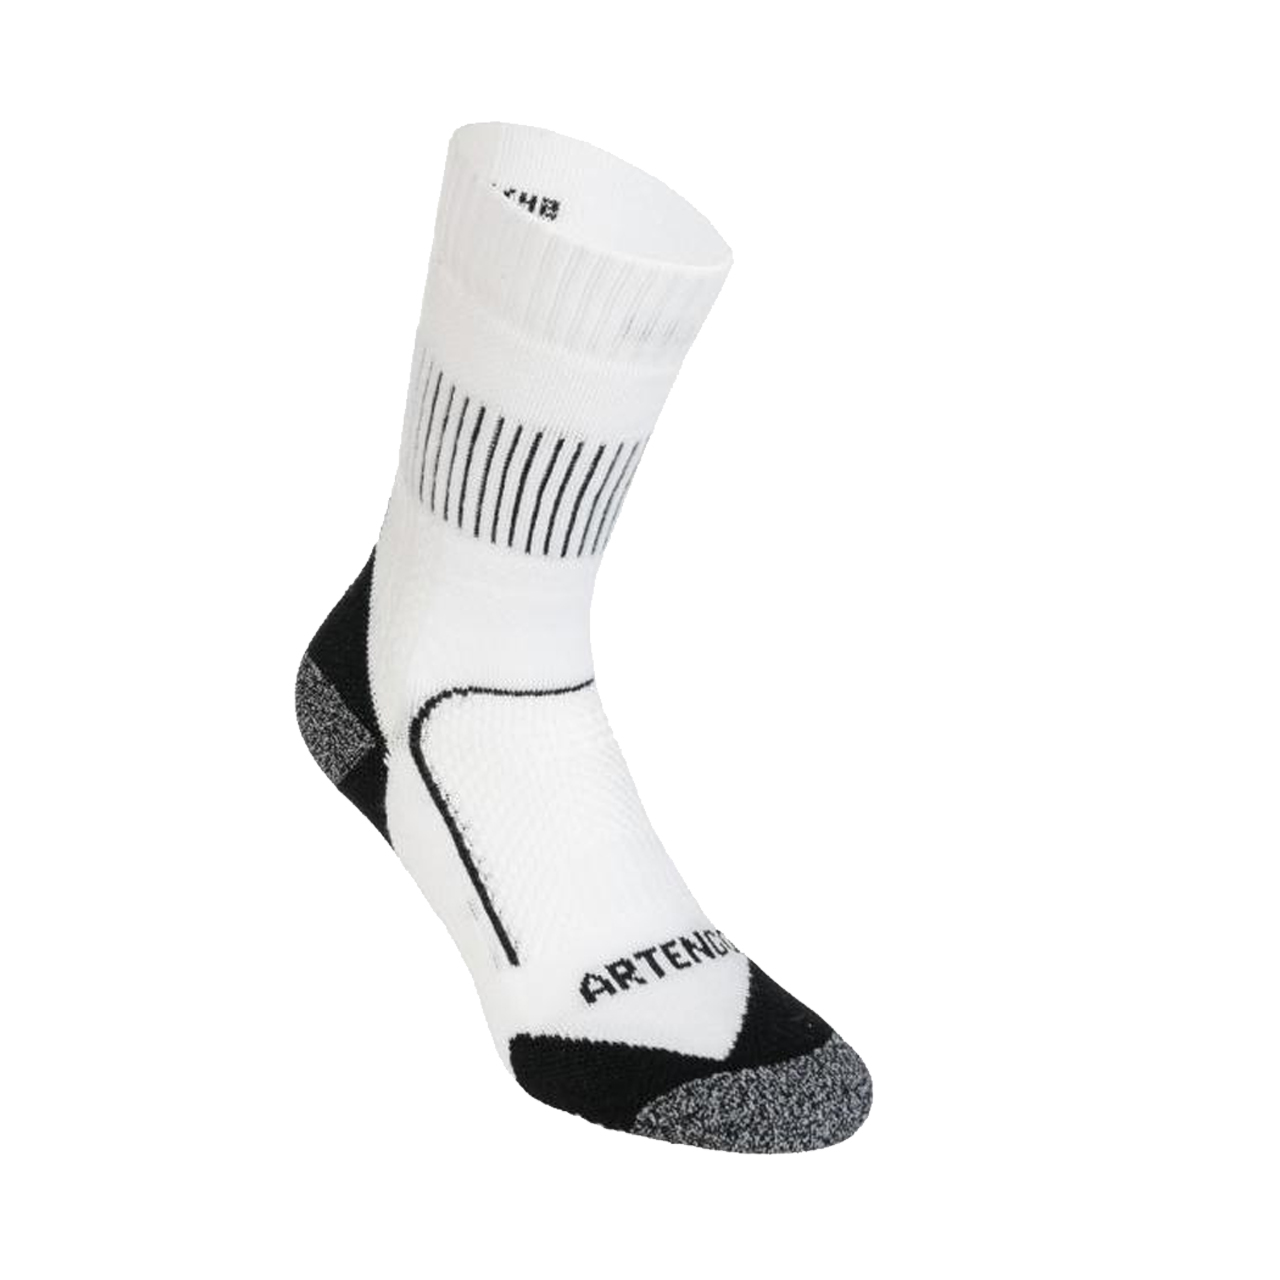 جوراب مردانه دکتلون مدل آرتنگو کد RS900 رنگ سفید